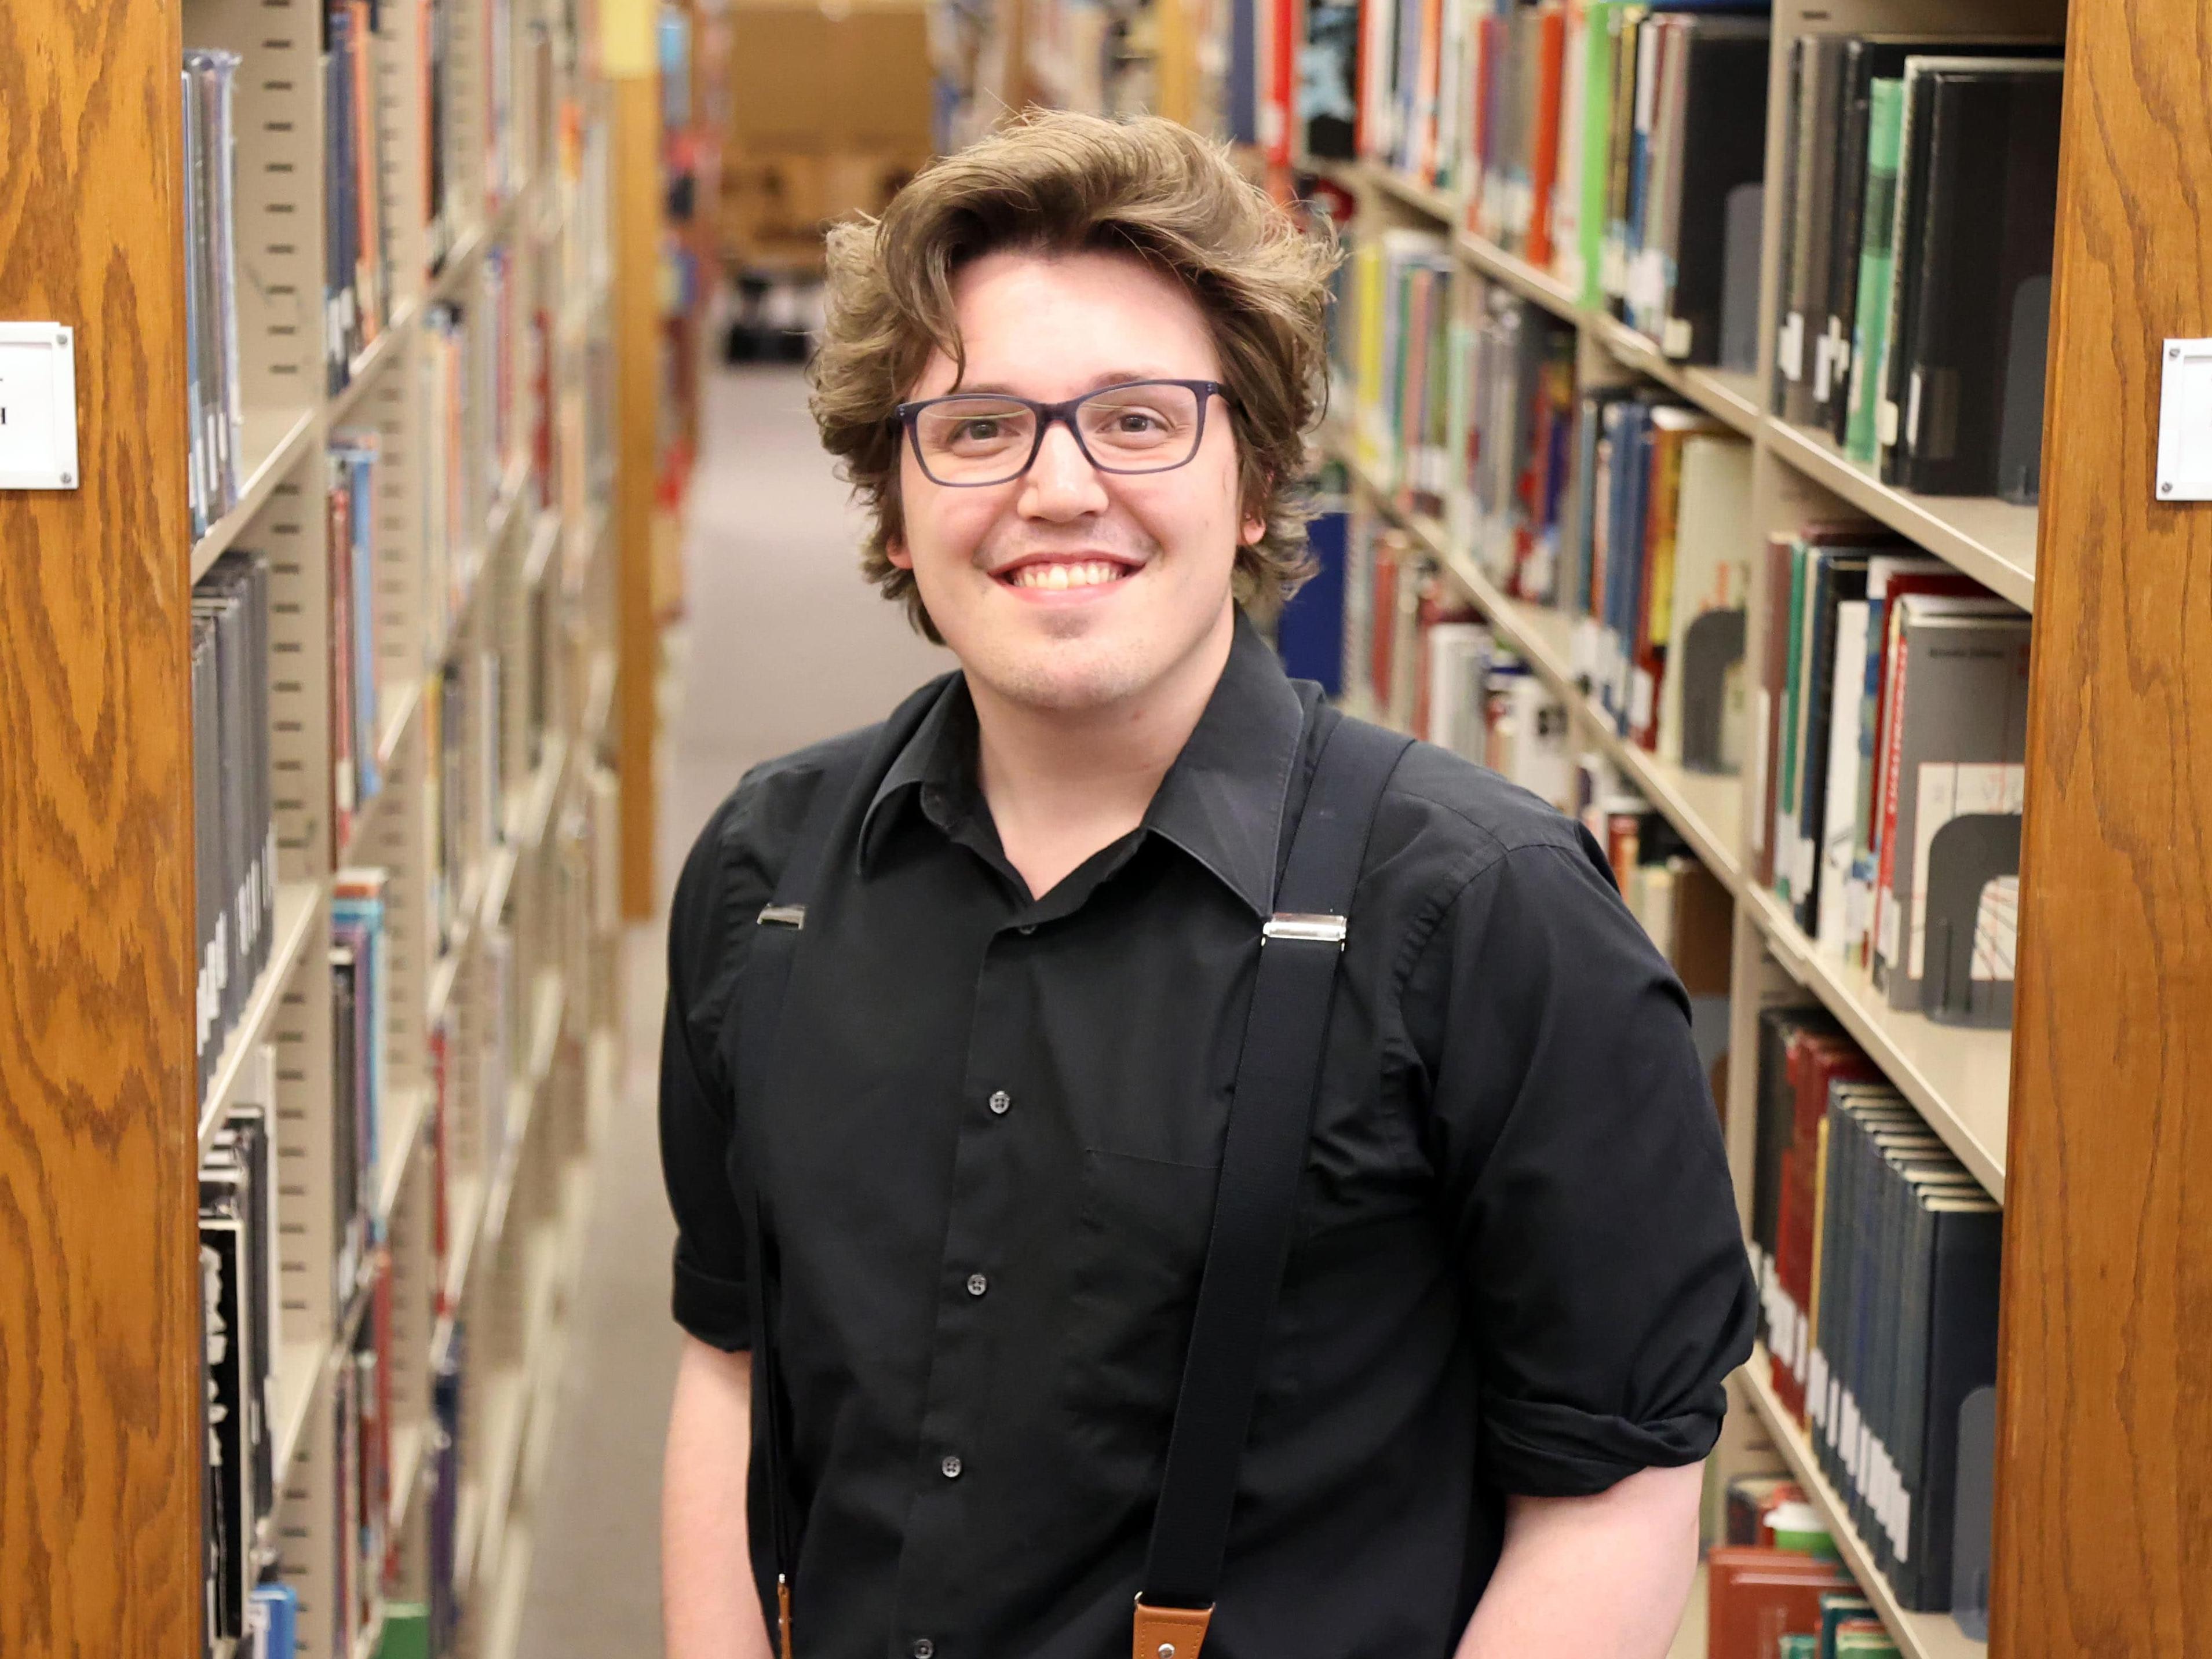 Zach Walton in the Lima Campus Library